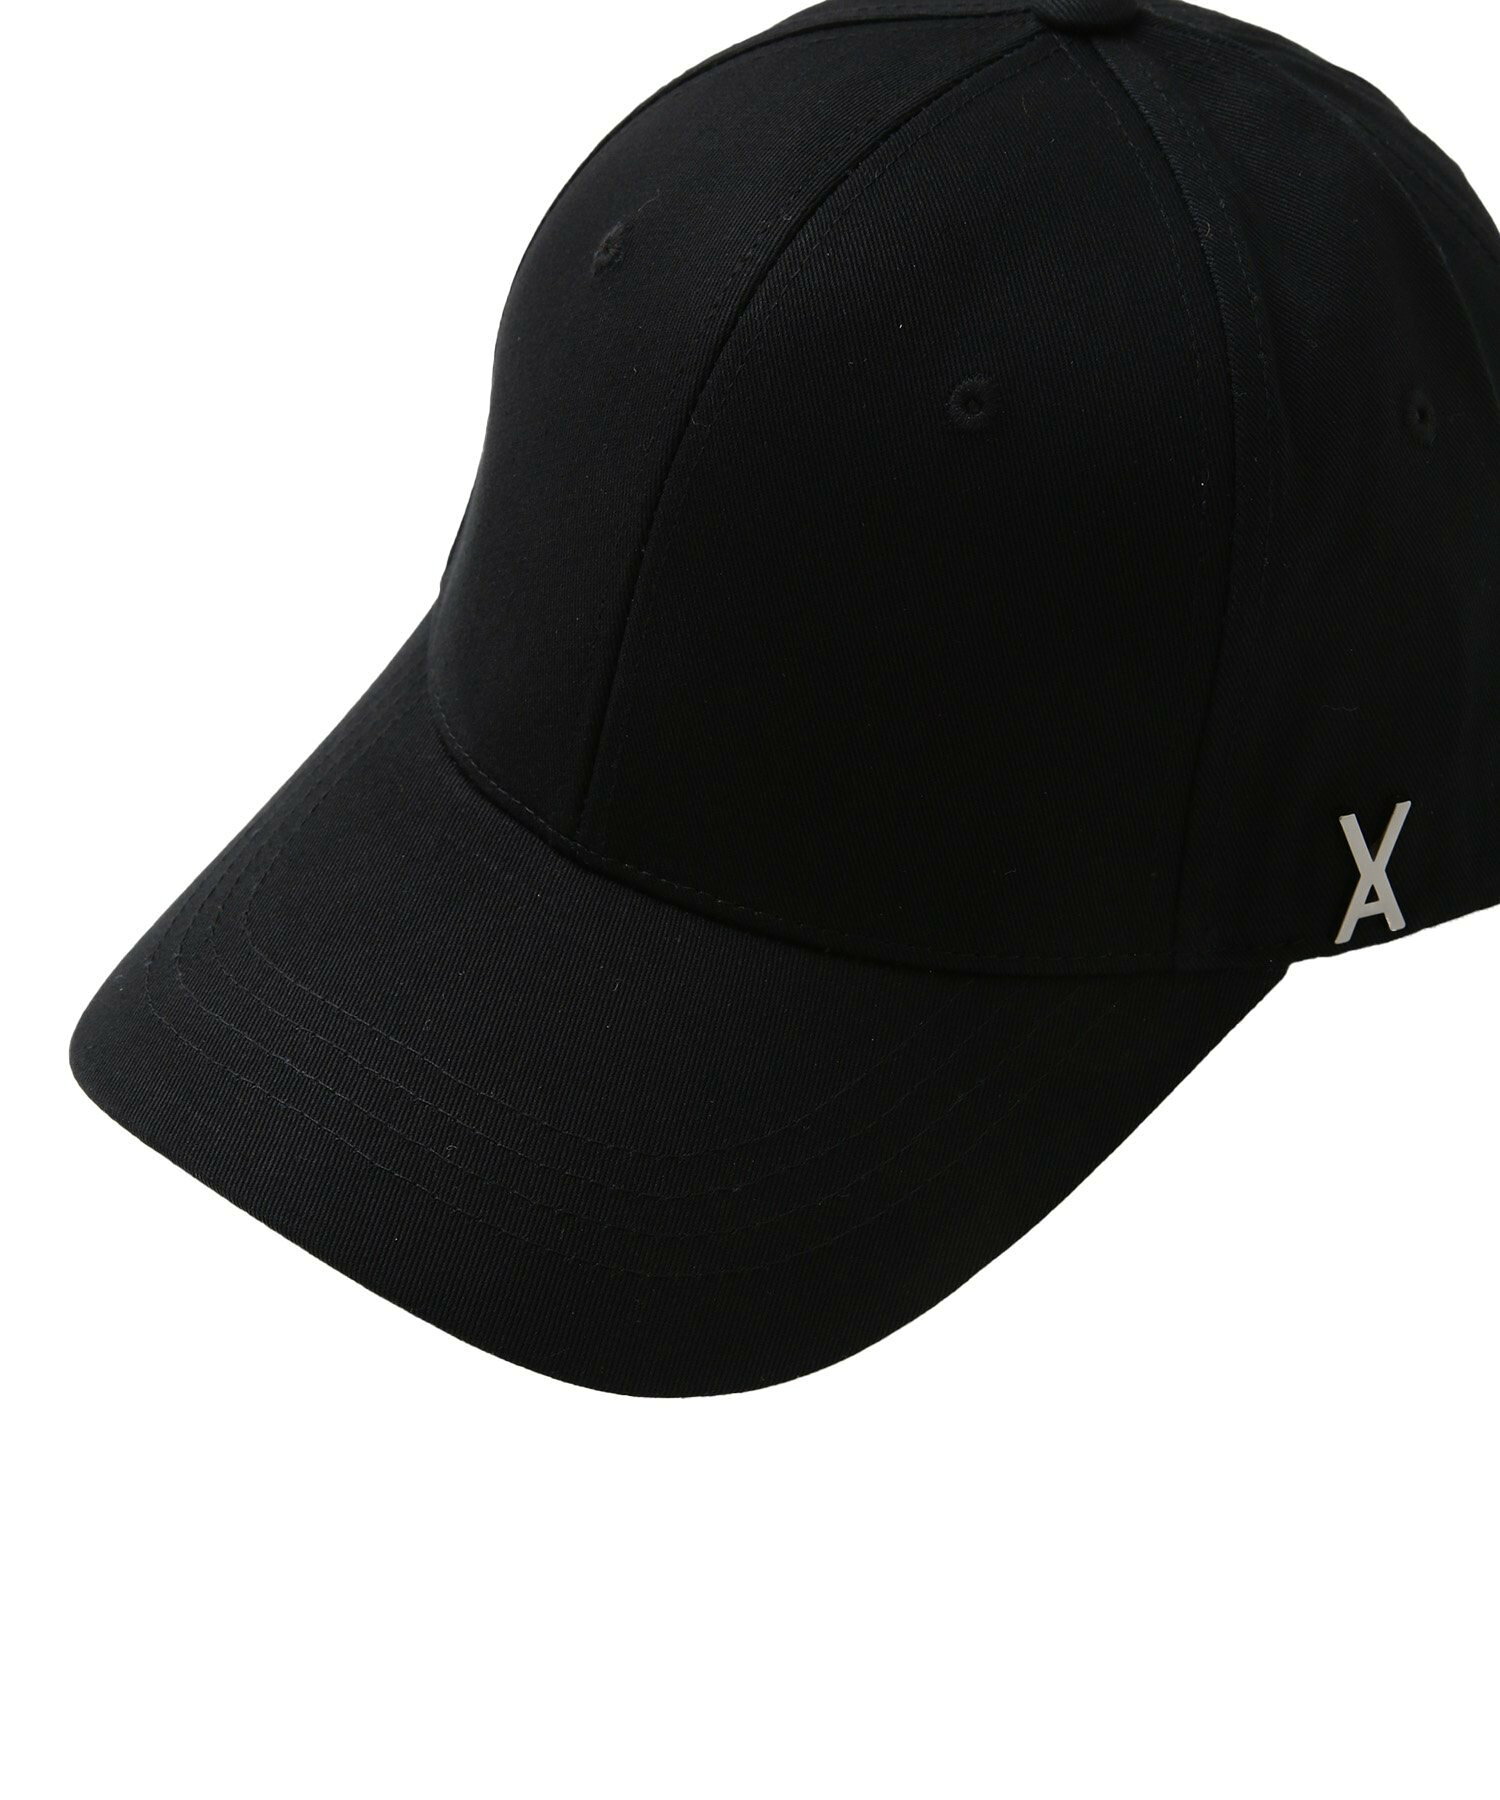 【 VARZAR / バザール 】Stud logo over fit ball cap